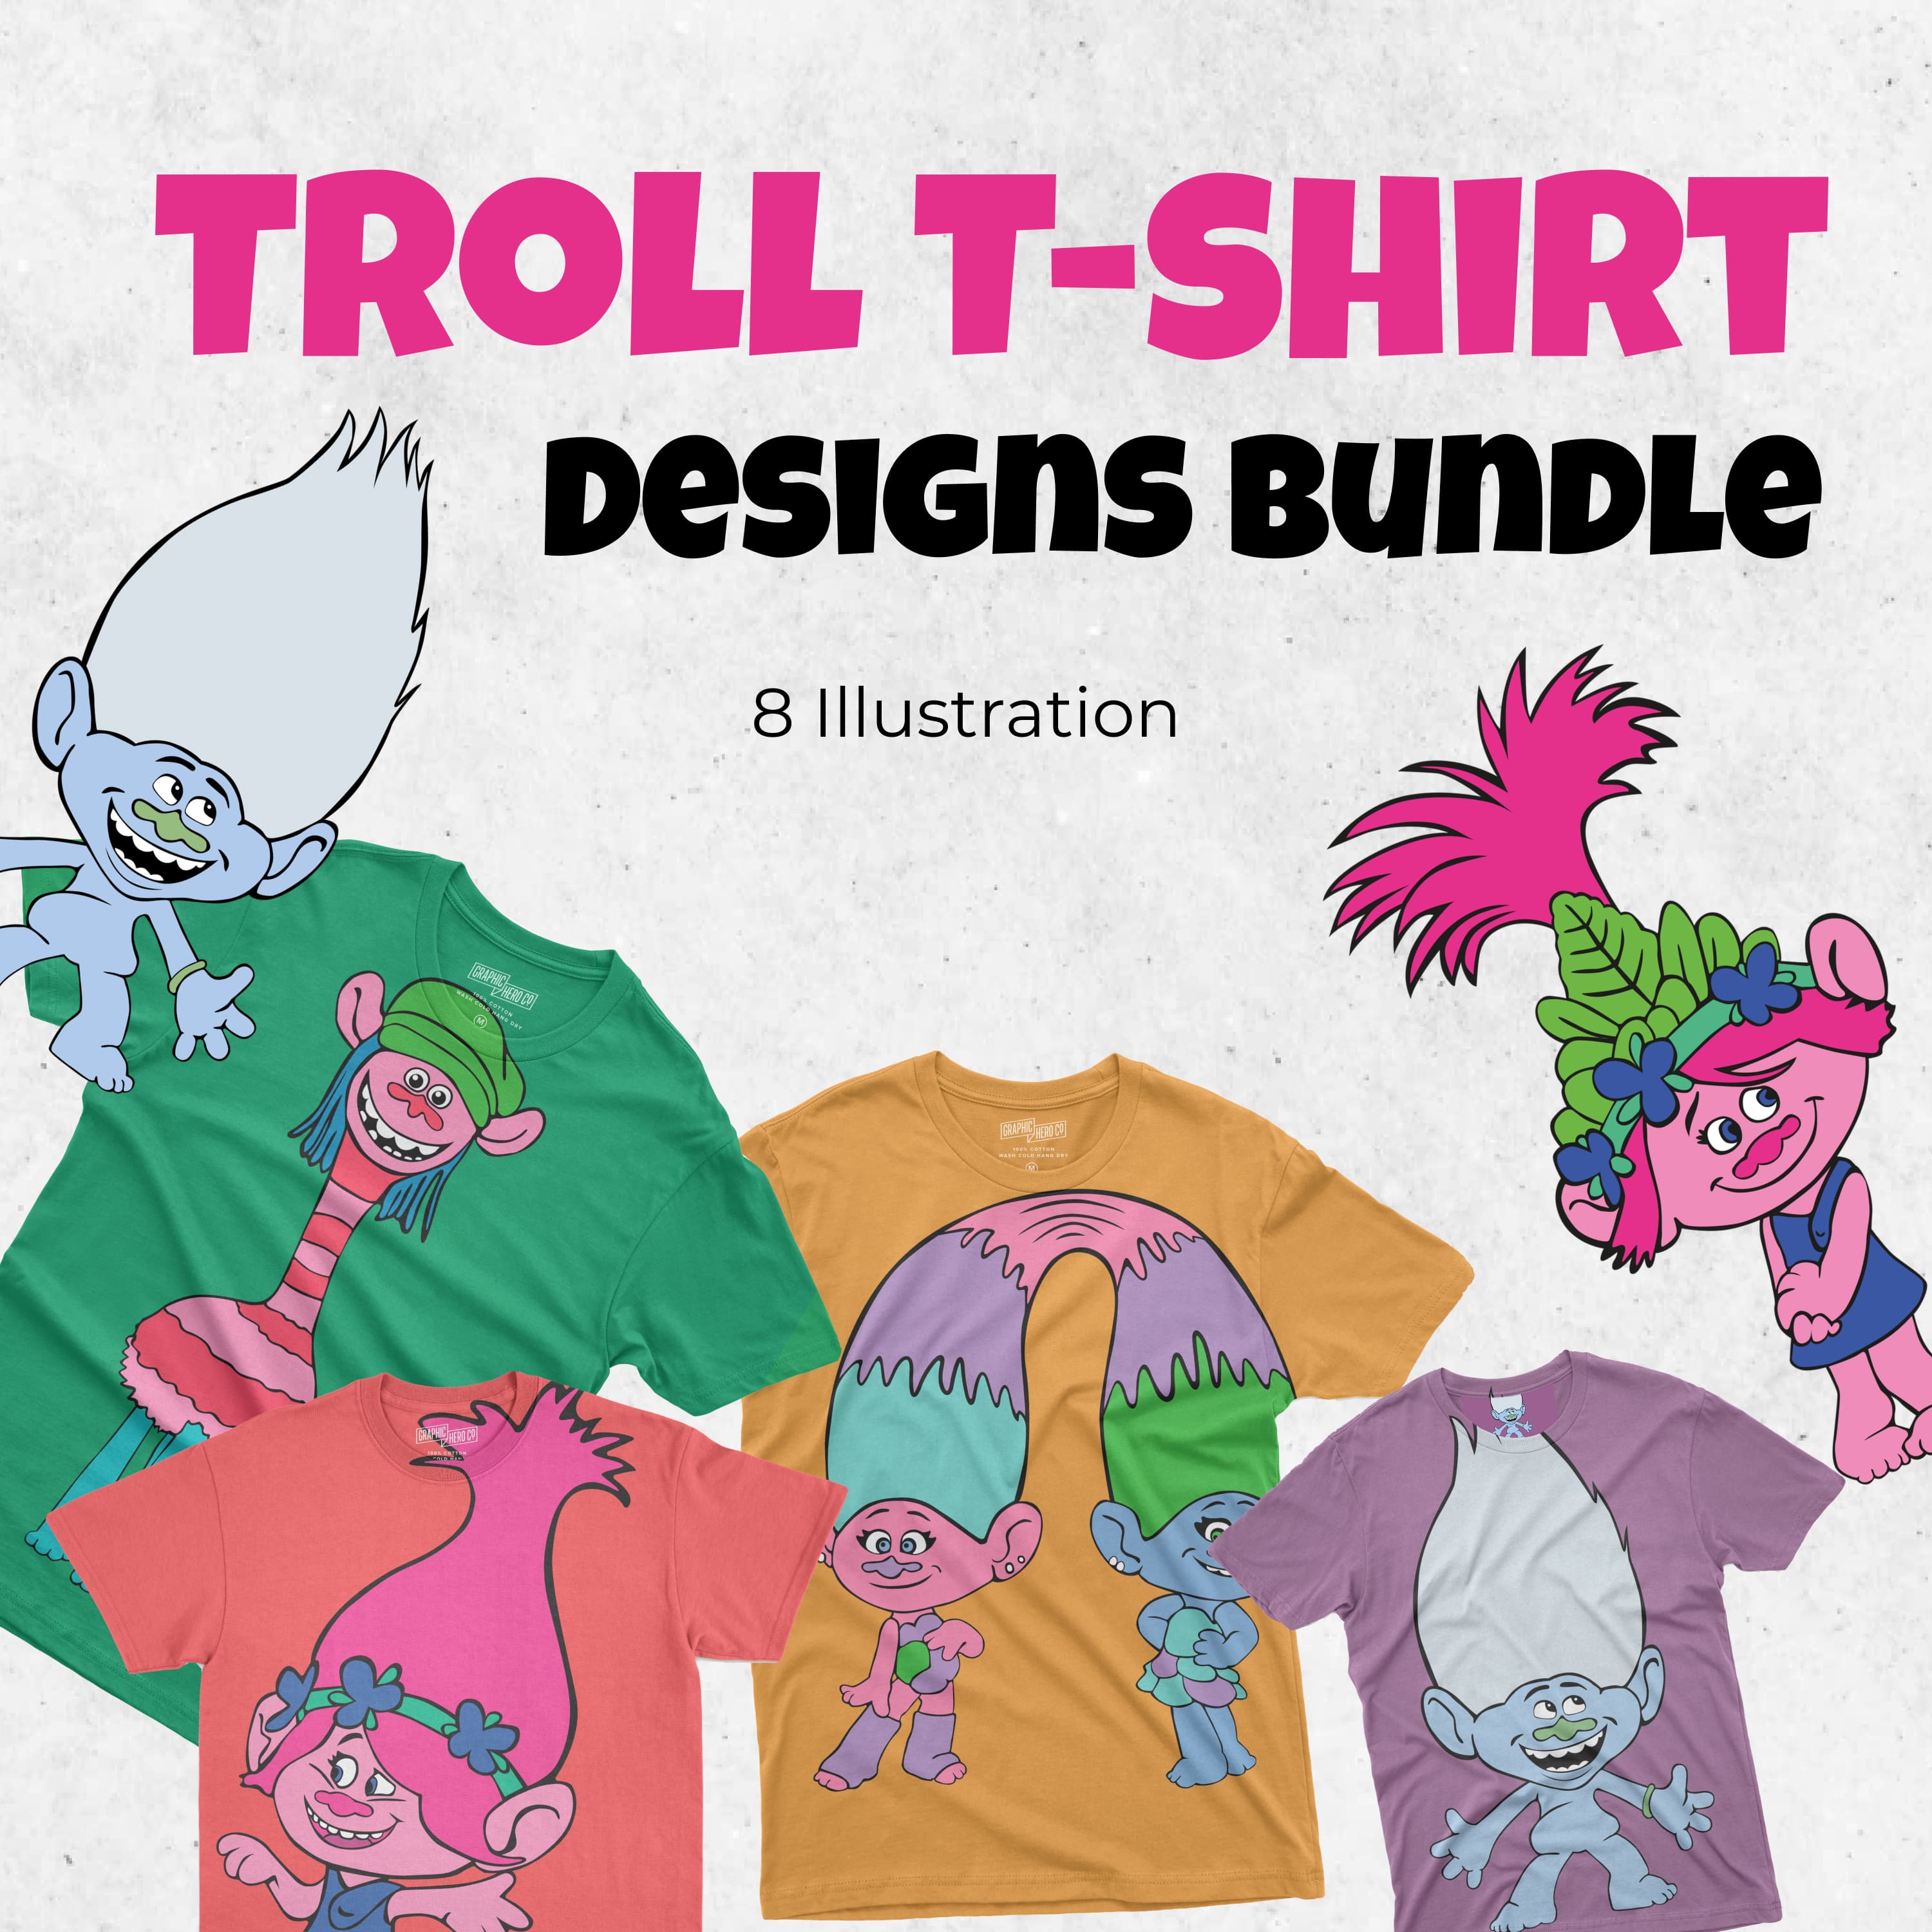 Prints of 8 Troll T-shirt Designs Bundle.